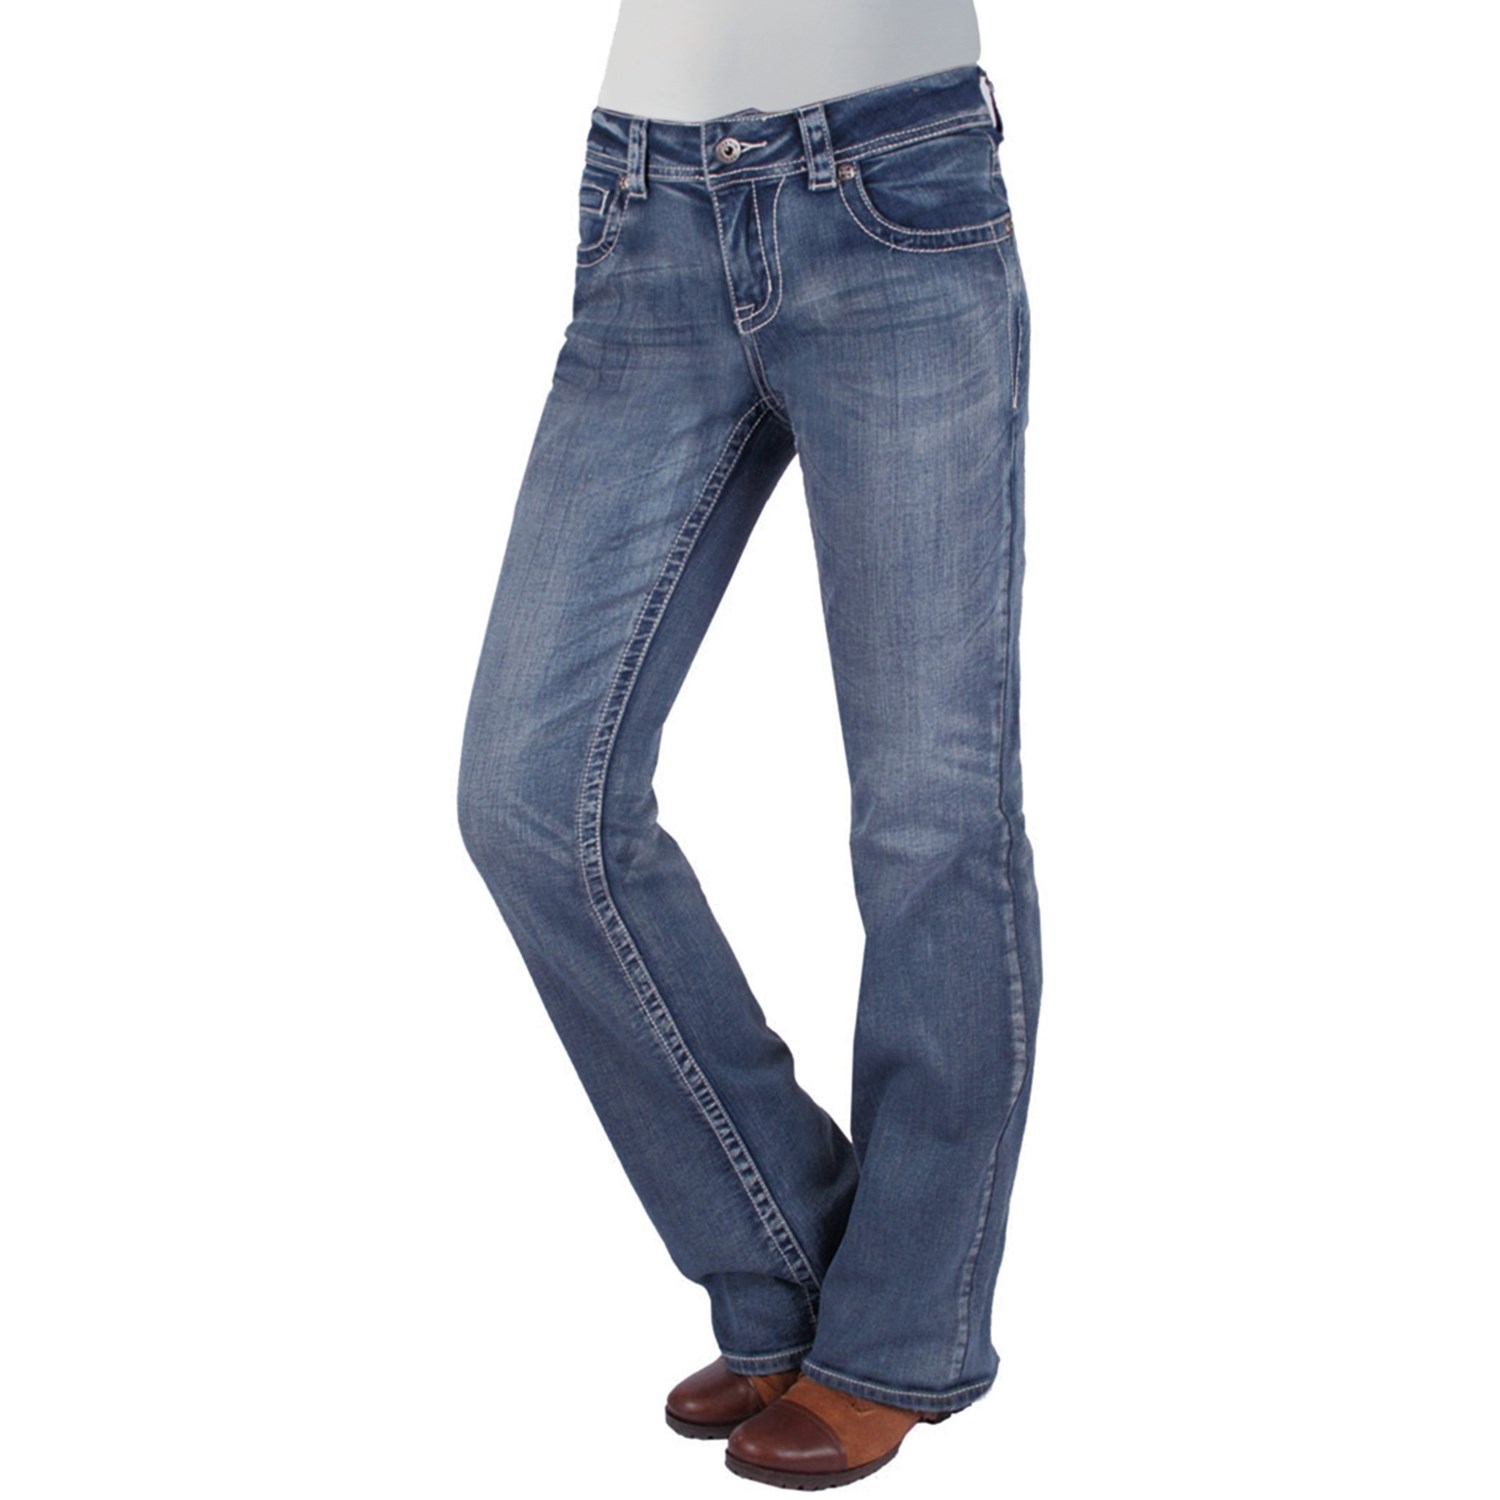 Zenim Lotus Bootcut Jeans - Mid Low Fit, Stretch Cotton (For Women ...